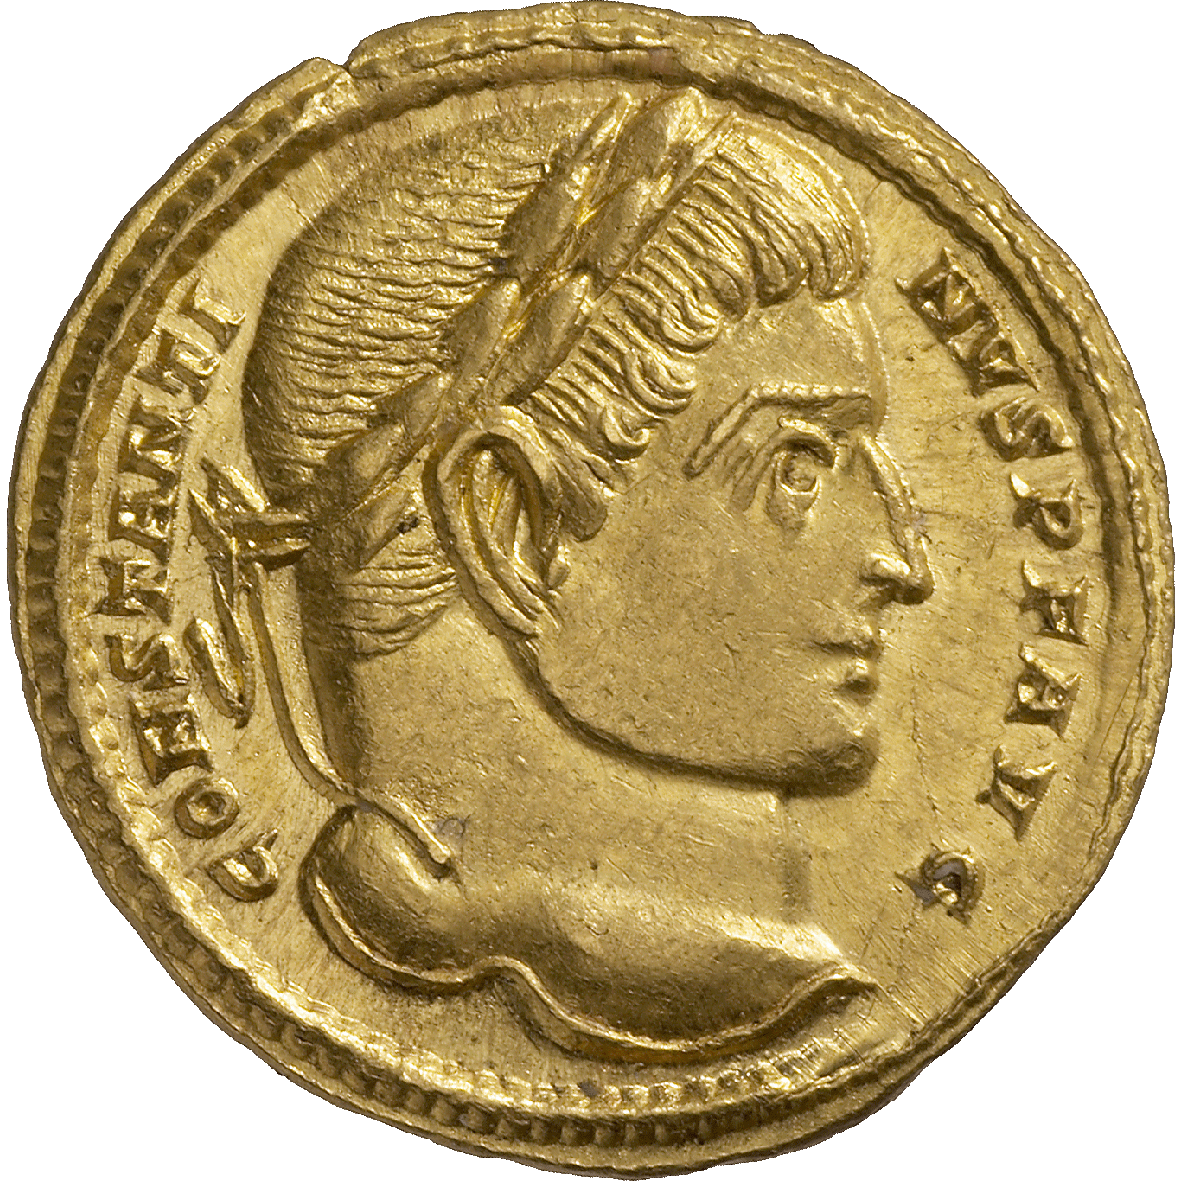 Roman Empire, Constantine I the Great, Solidus (obverse)